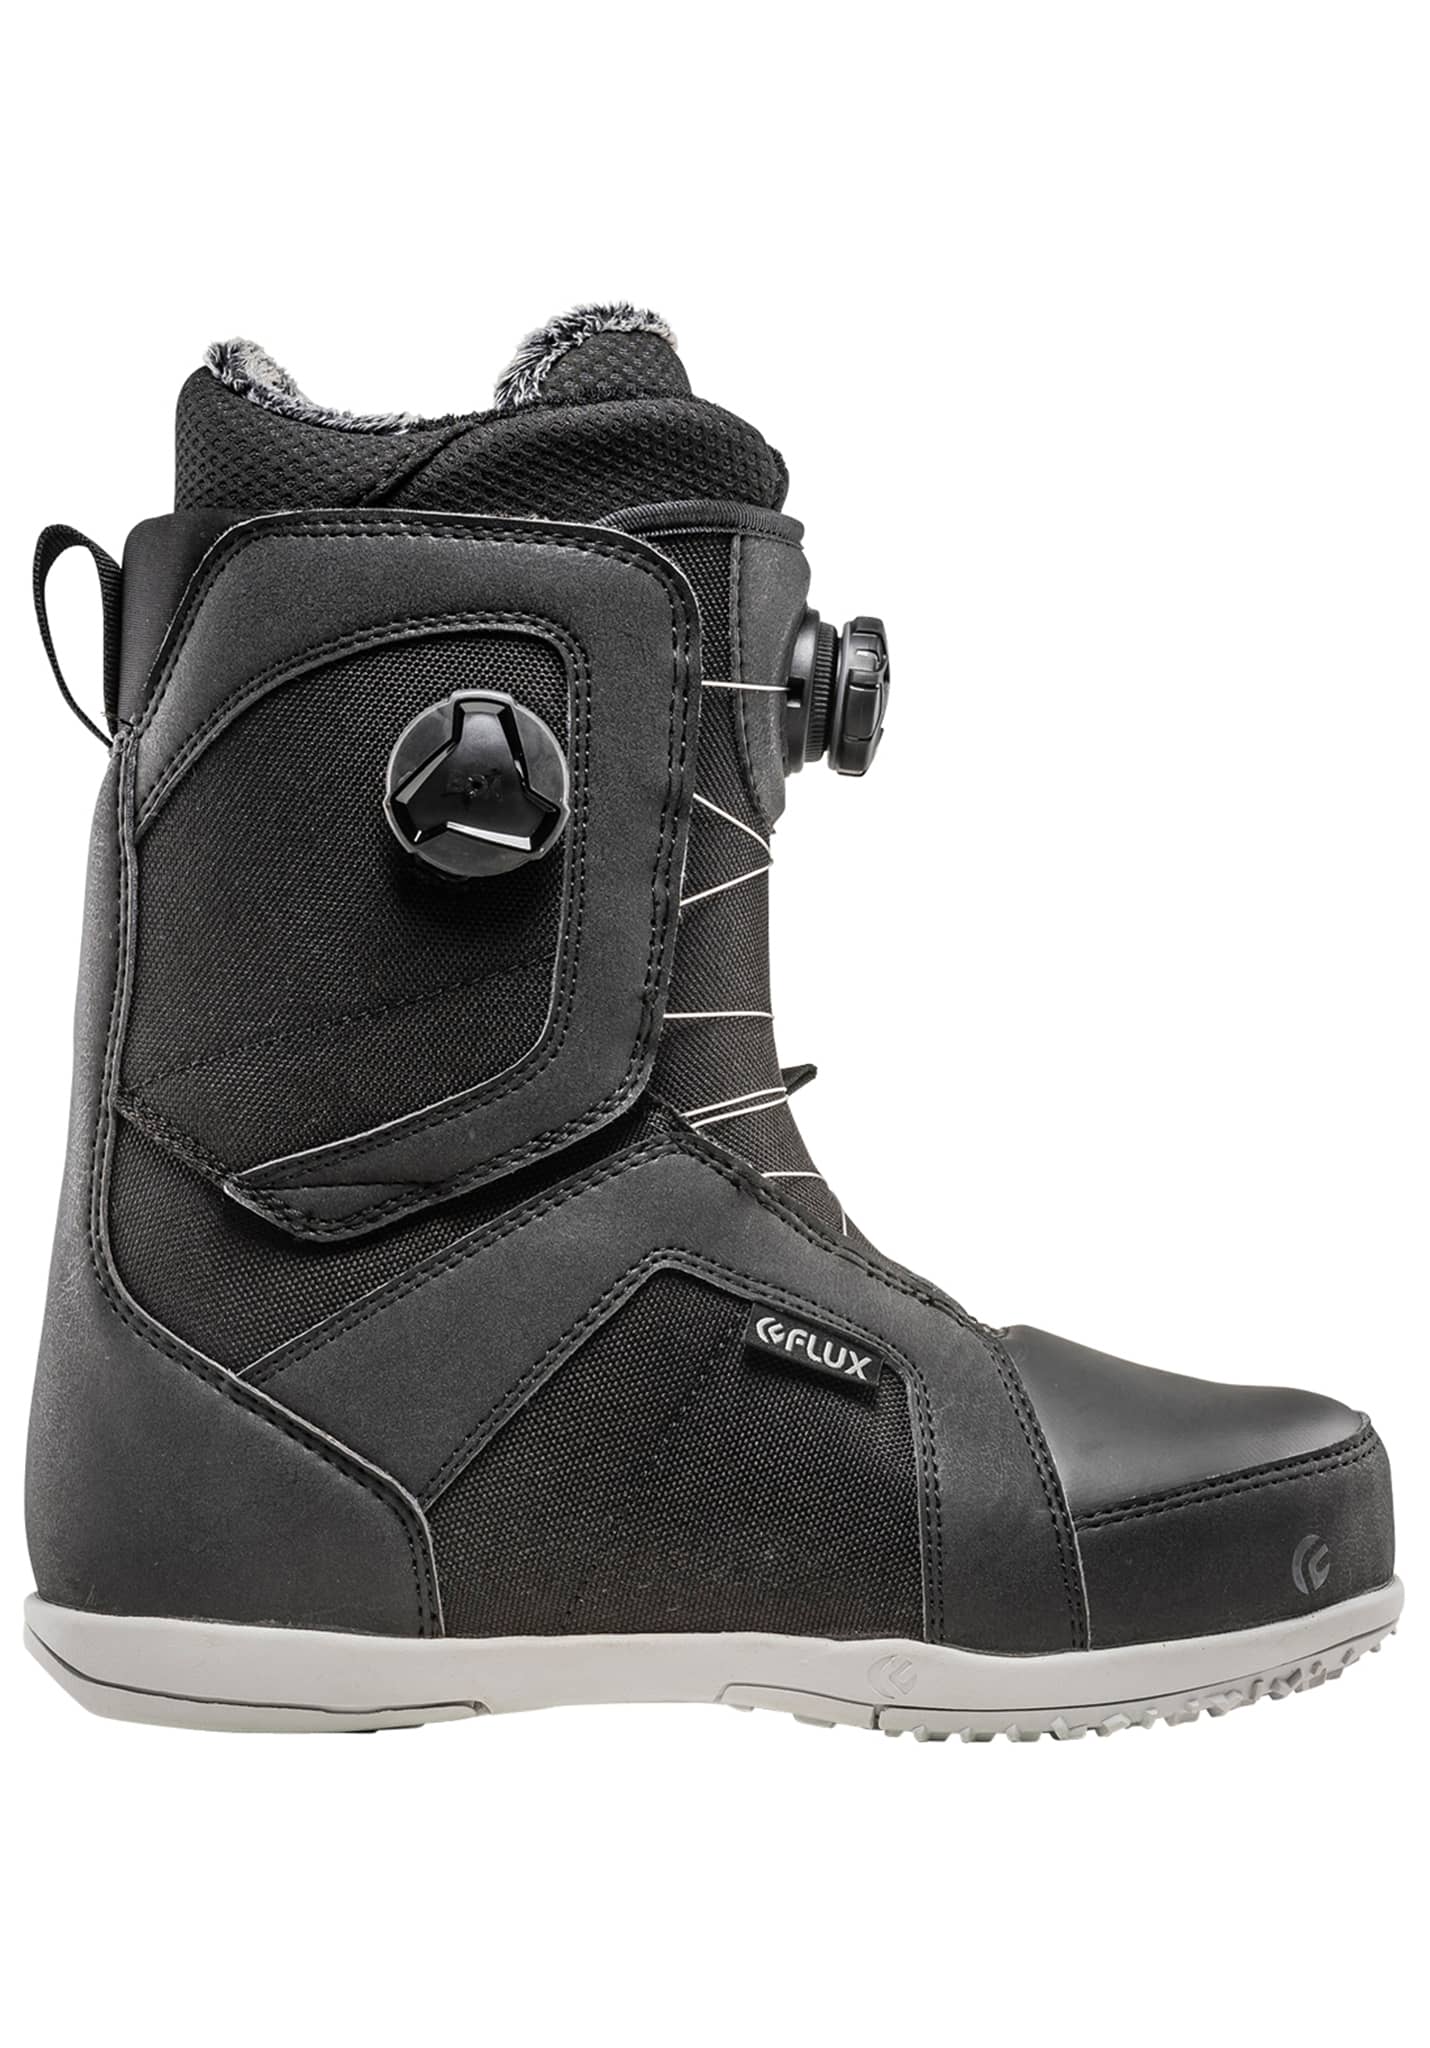 Flux TX-Boa All Mountain Snowboard Boots black 43